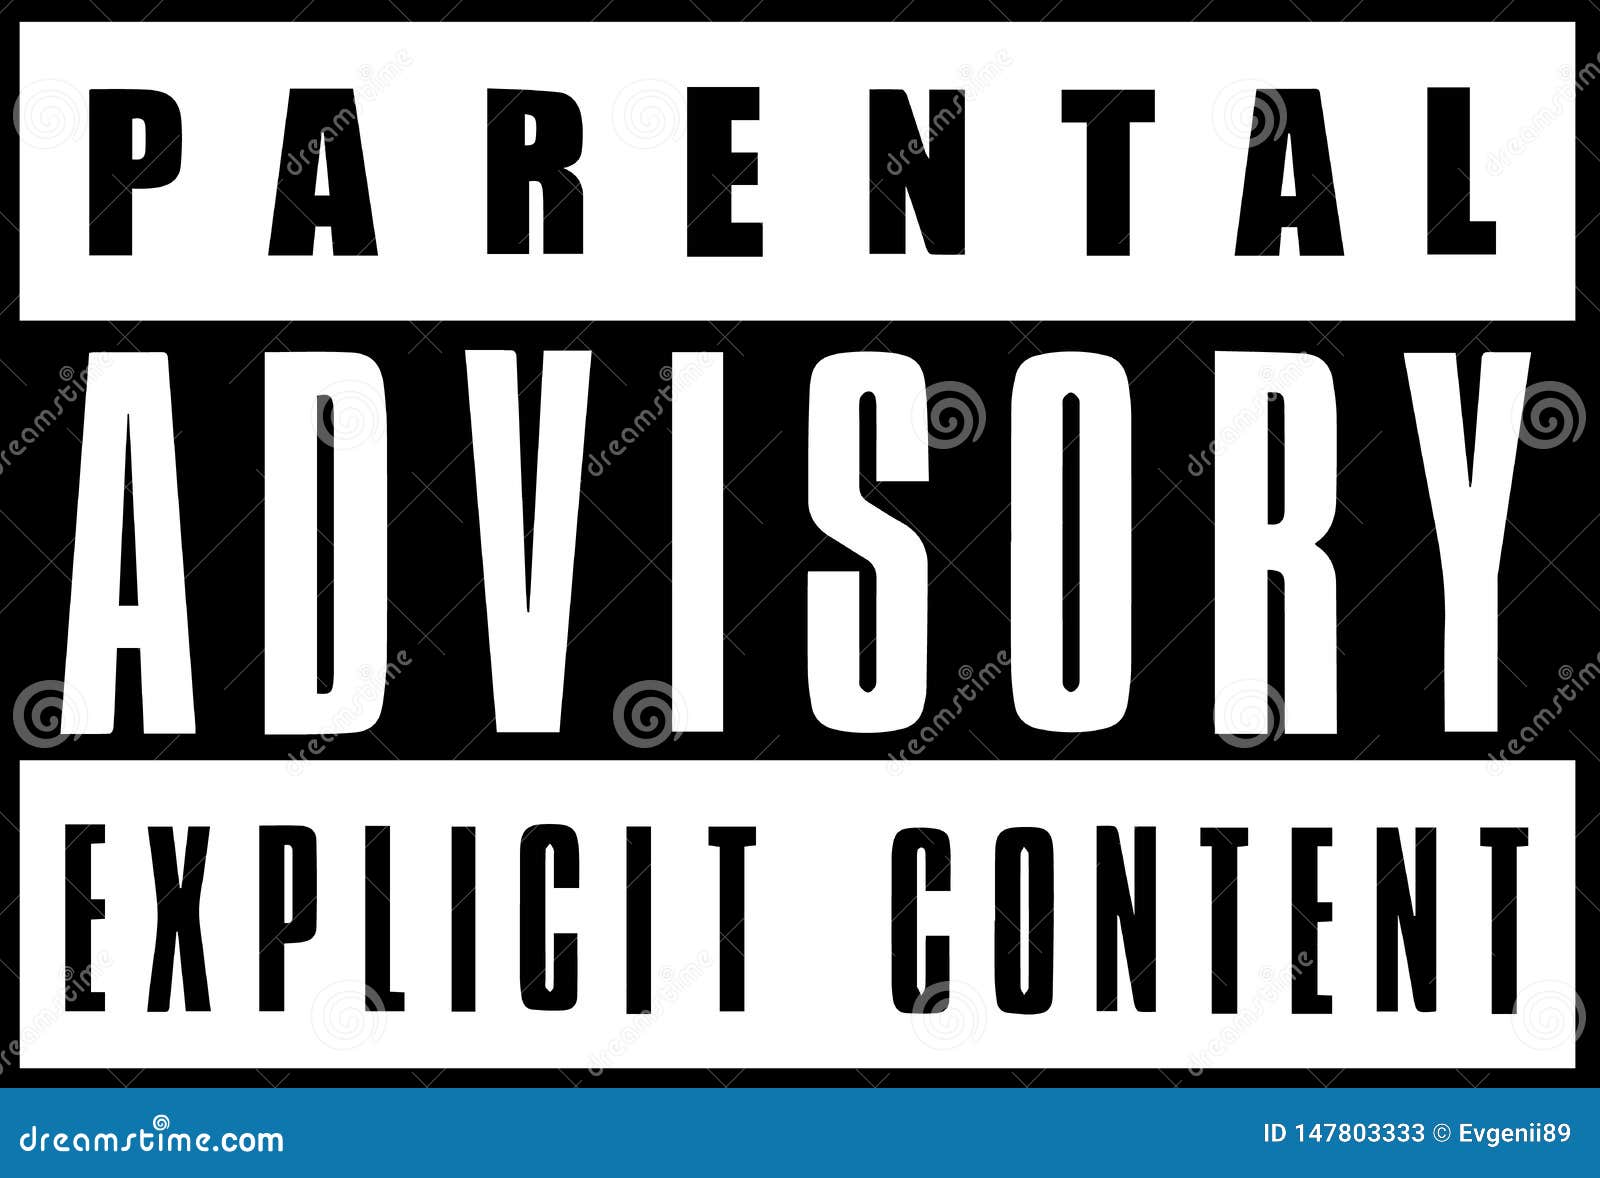 parental advisory, explicit content, warning sign